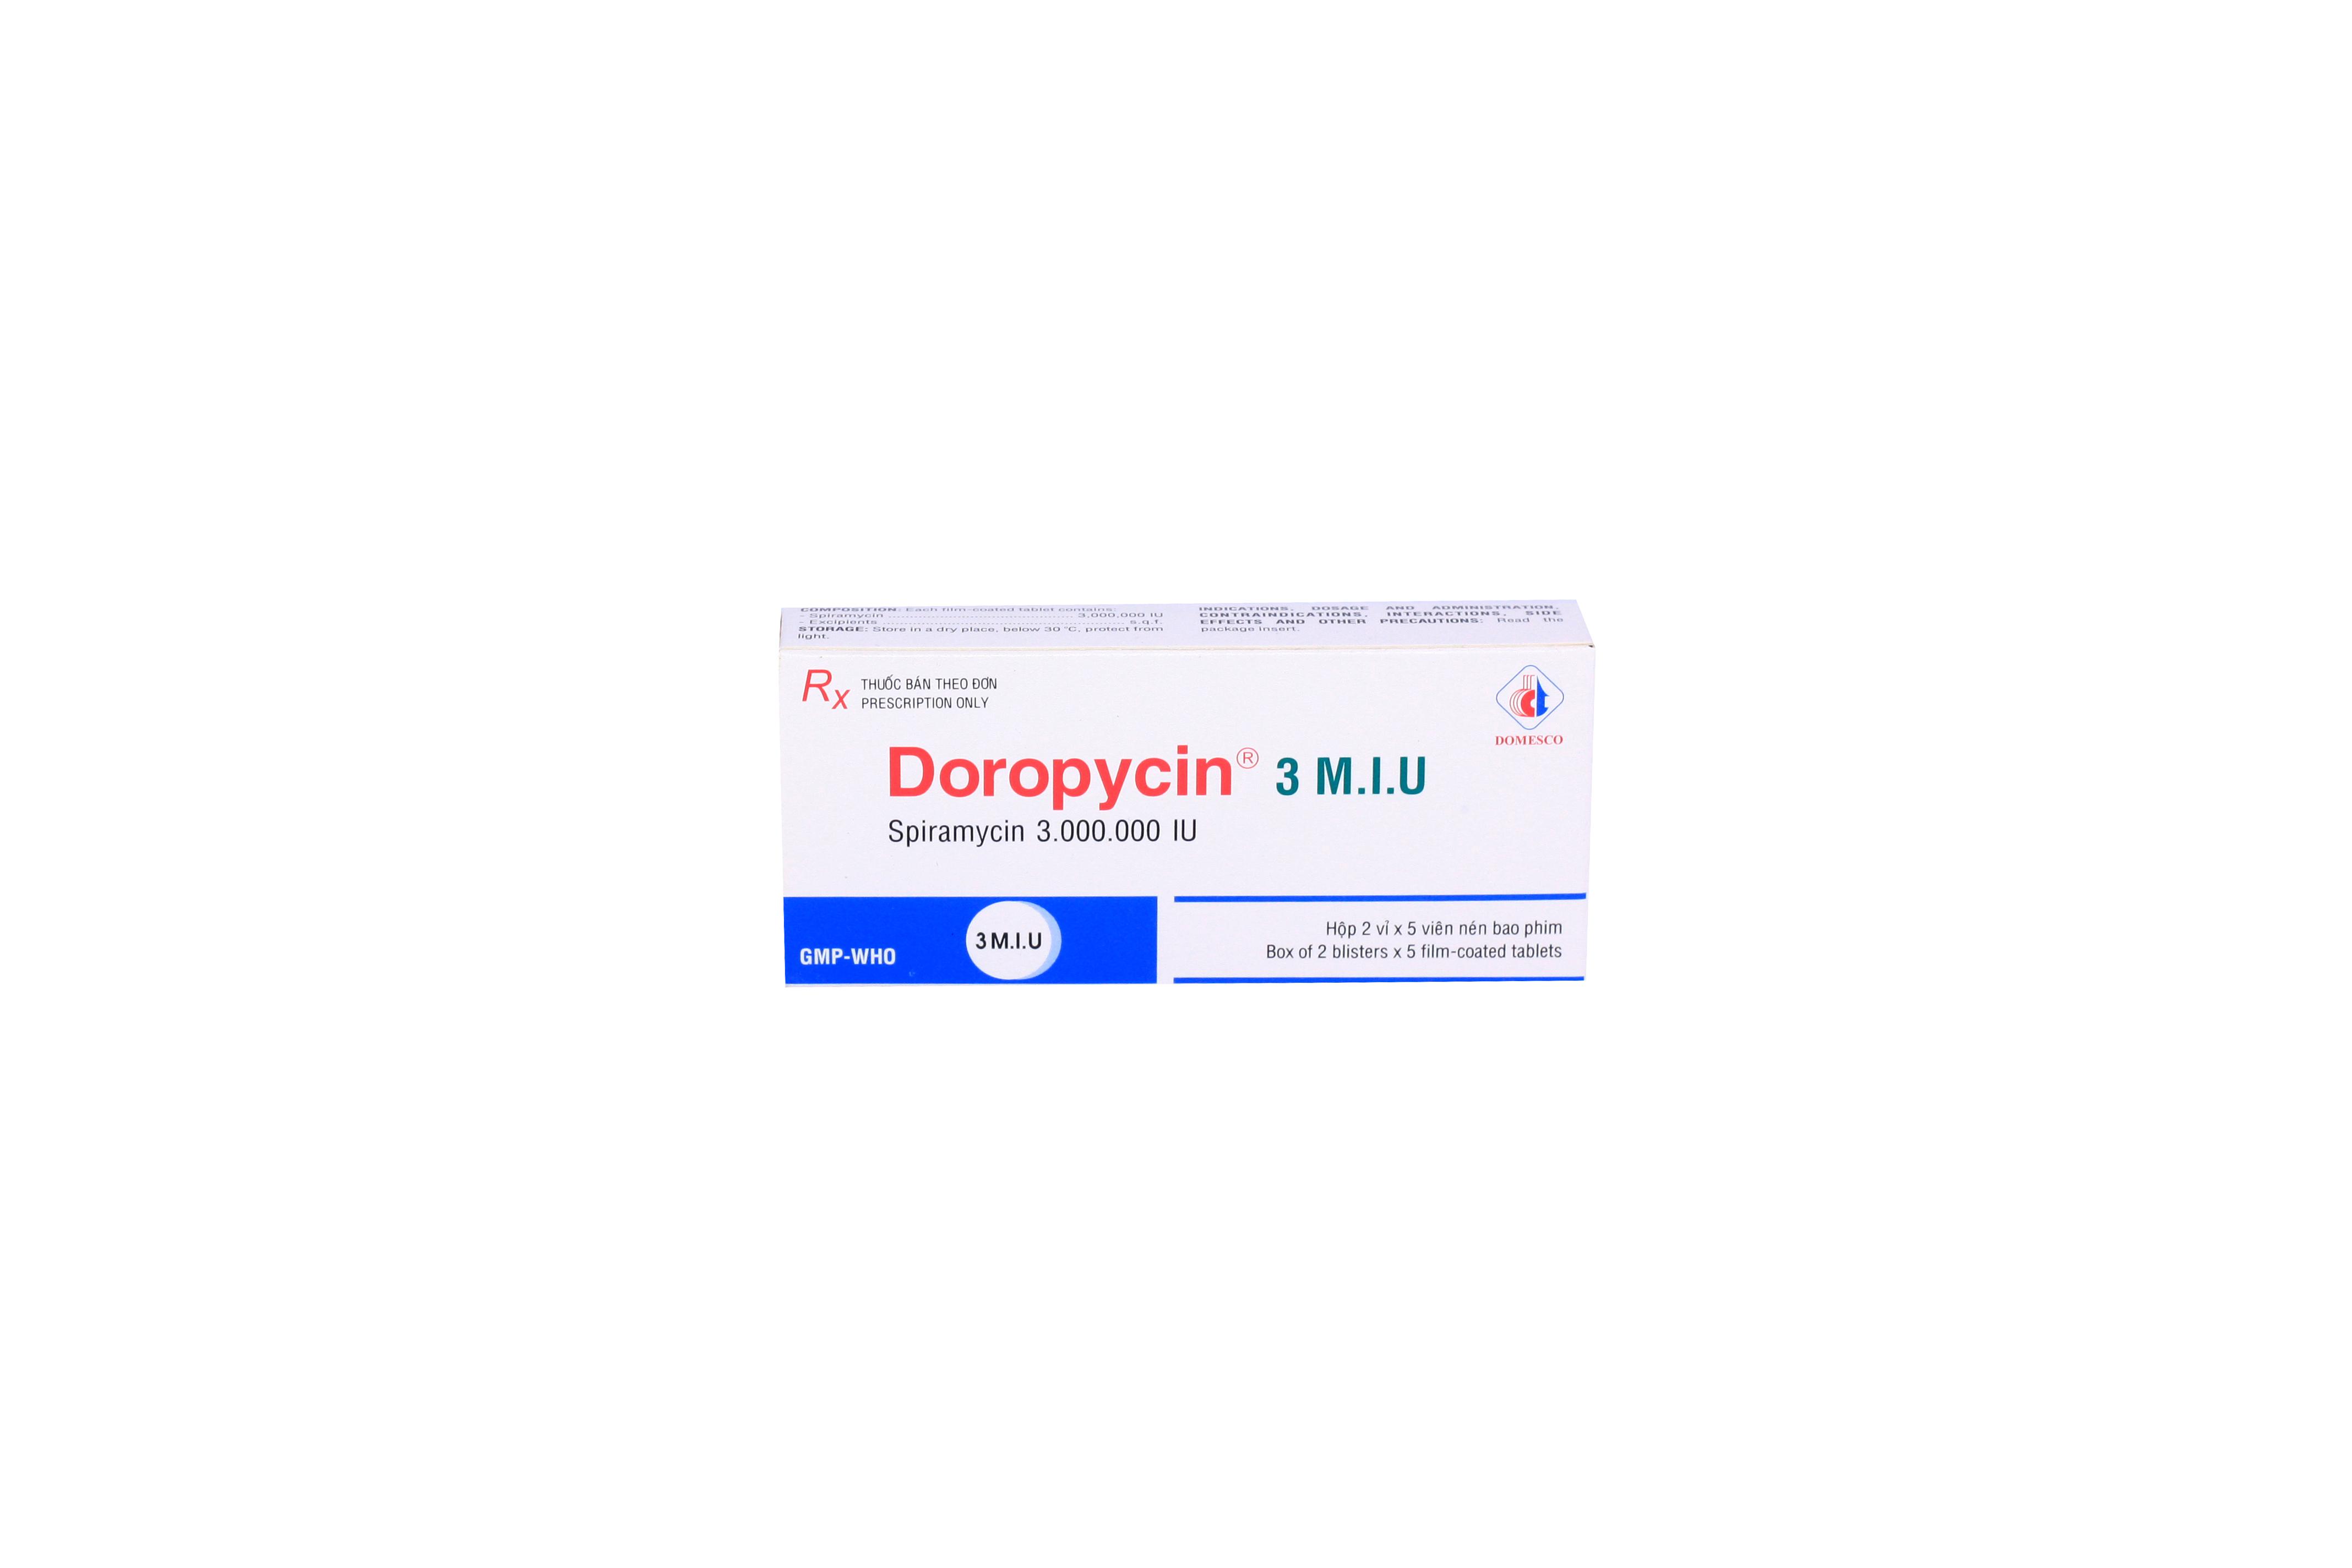 Doropycin 3 M.I.U (Spiramycin) Domesco (H/10v)